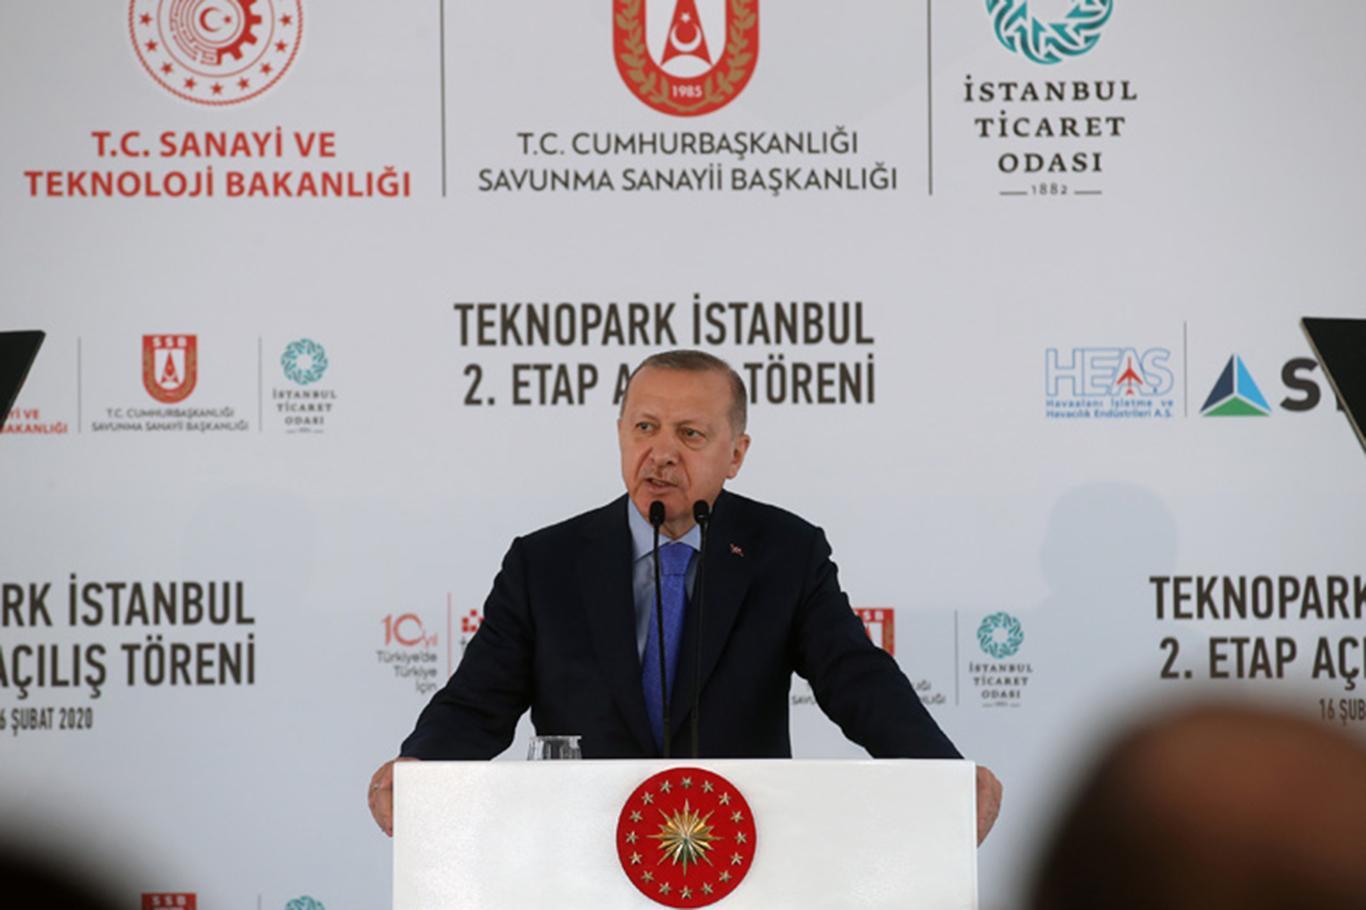 Erdoğan: Turkey’s future lies in technology and innovation